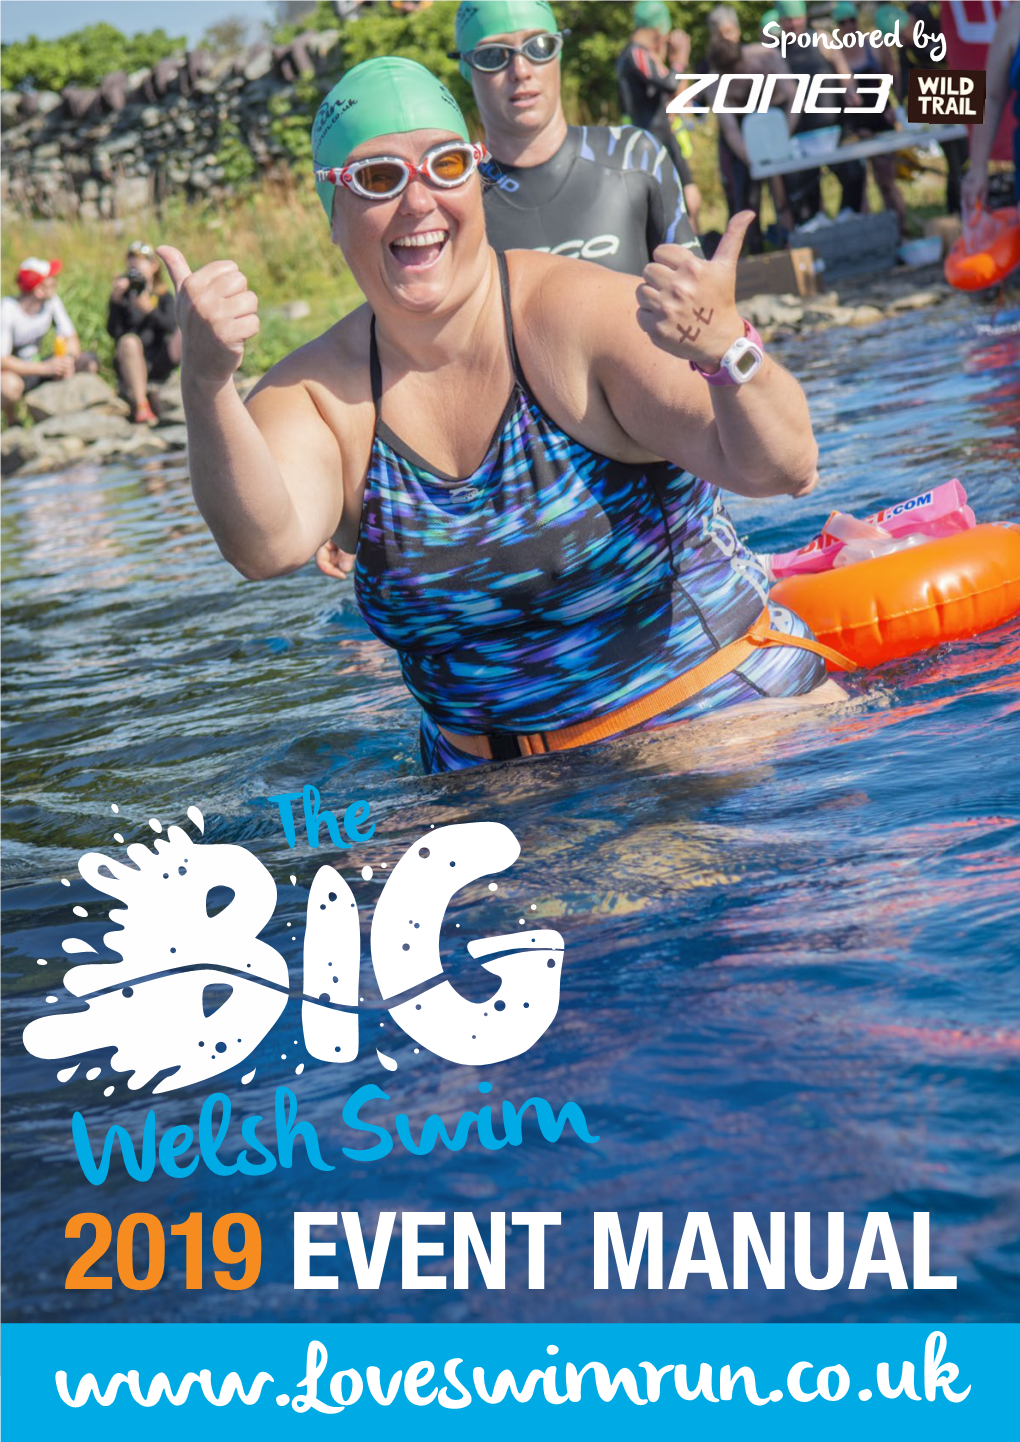 2019 Event Manual the Big Welsh Swim 2019 Event Manual